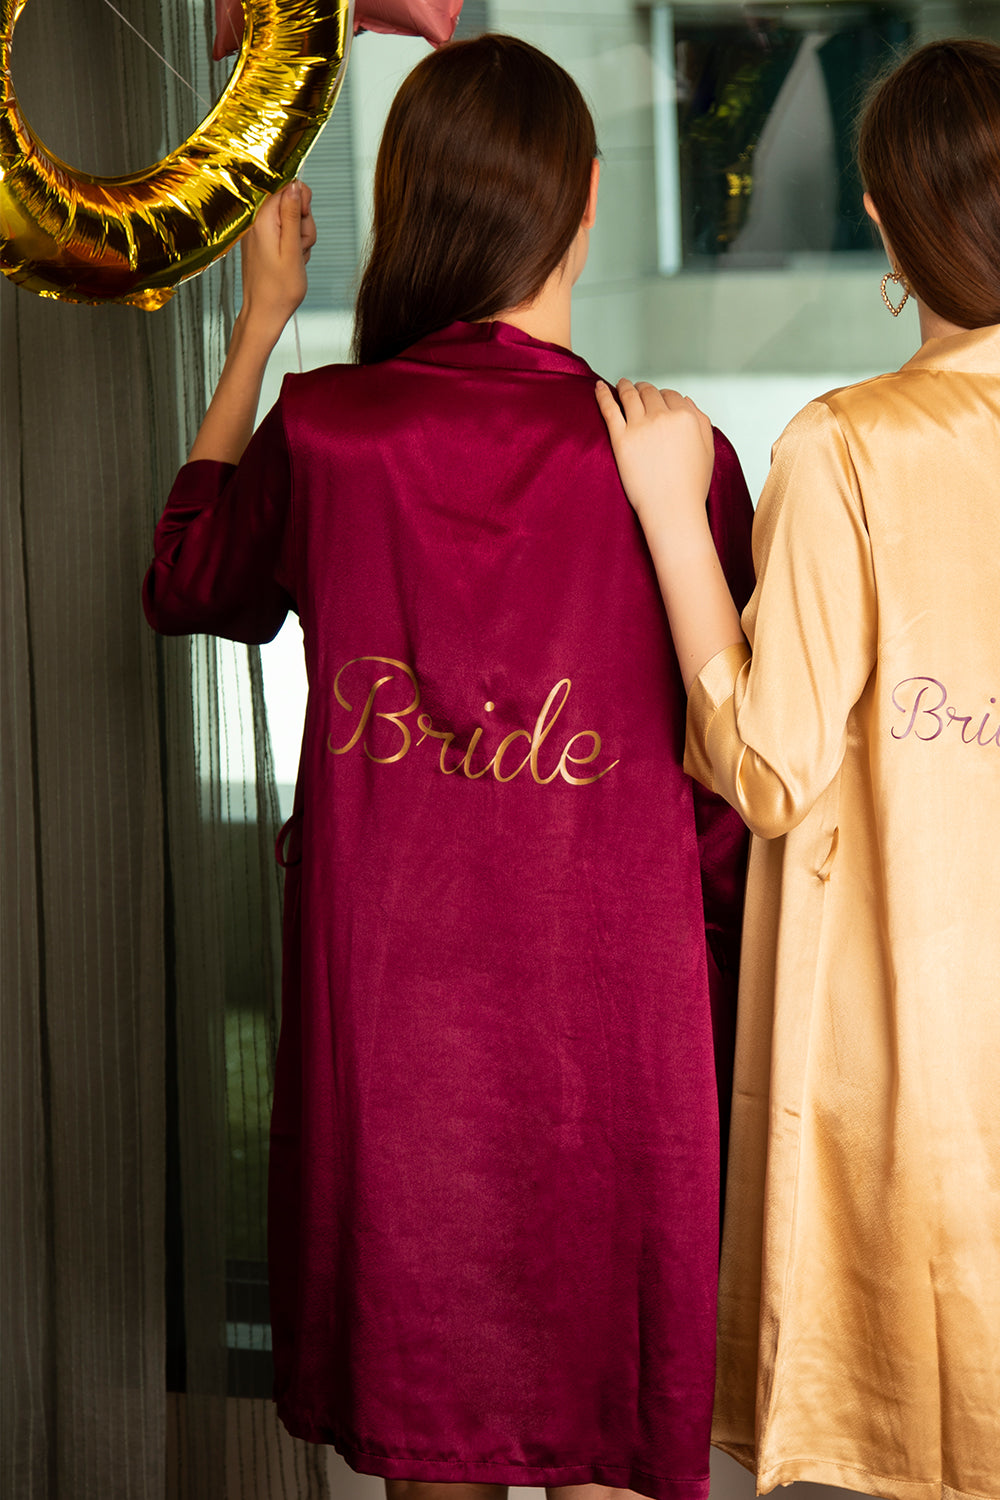 Bride Robe in Satin Wine Color Private Lives